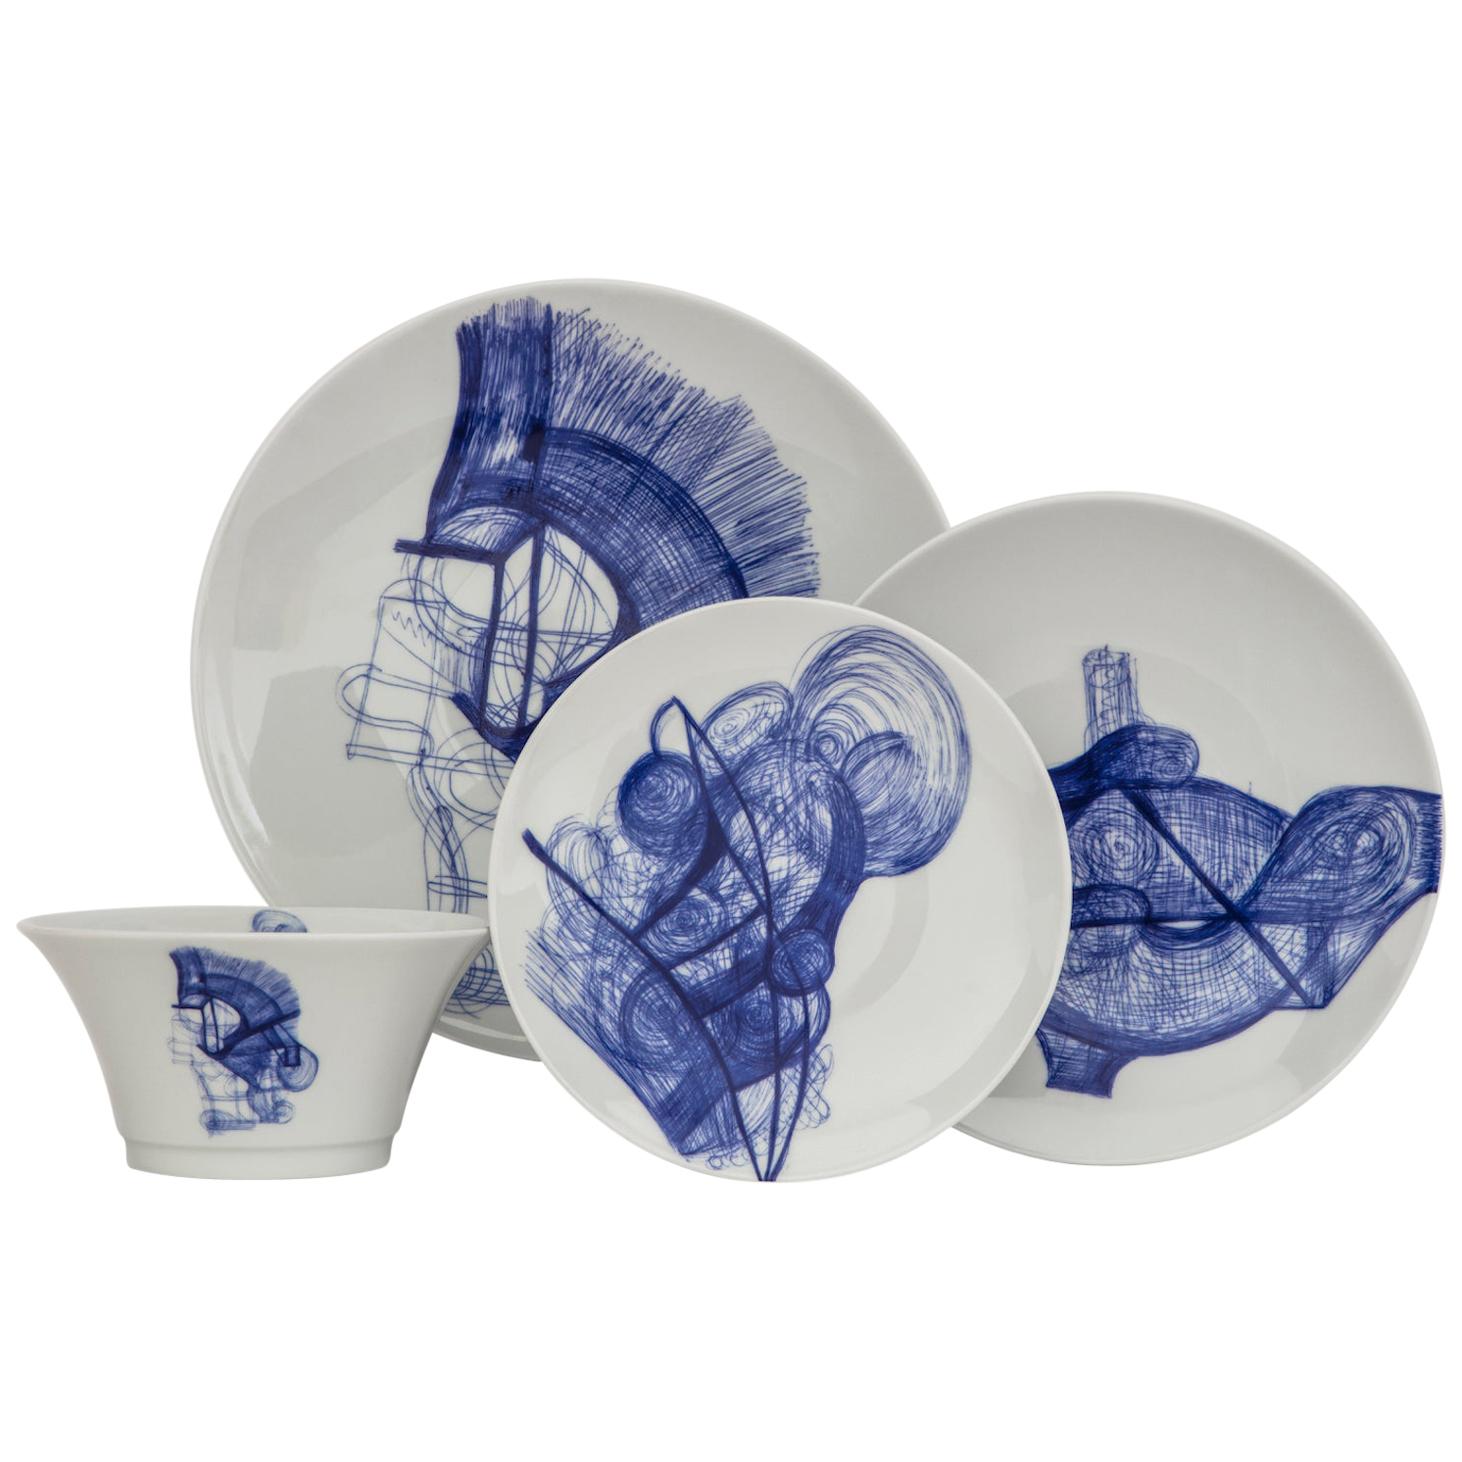 Delft Blue White French Limoges 4-Piece Porcelain Dinner Setting, Plates Bowl